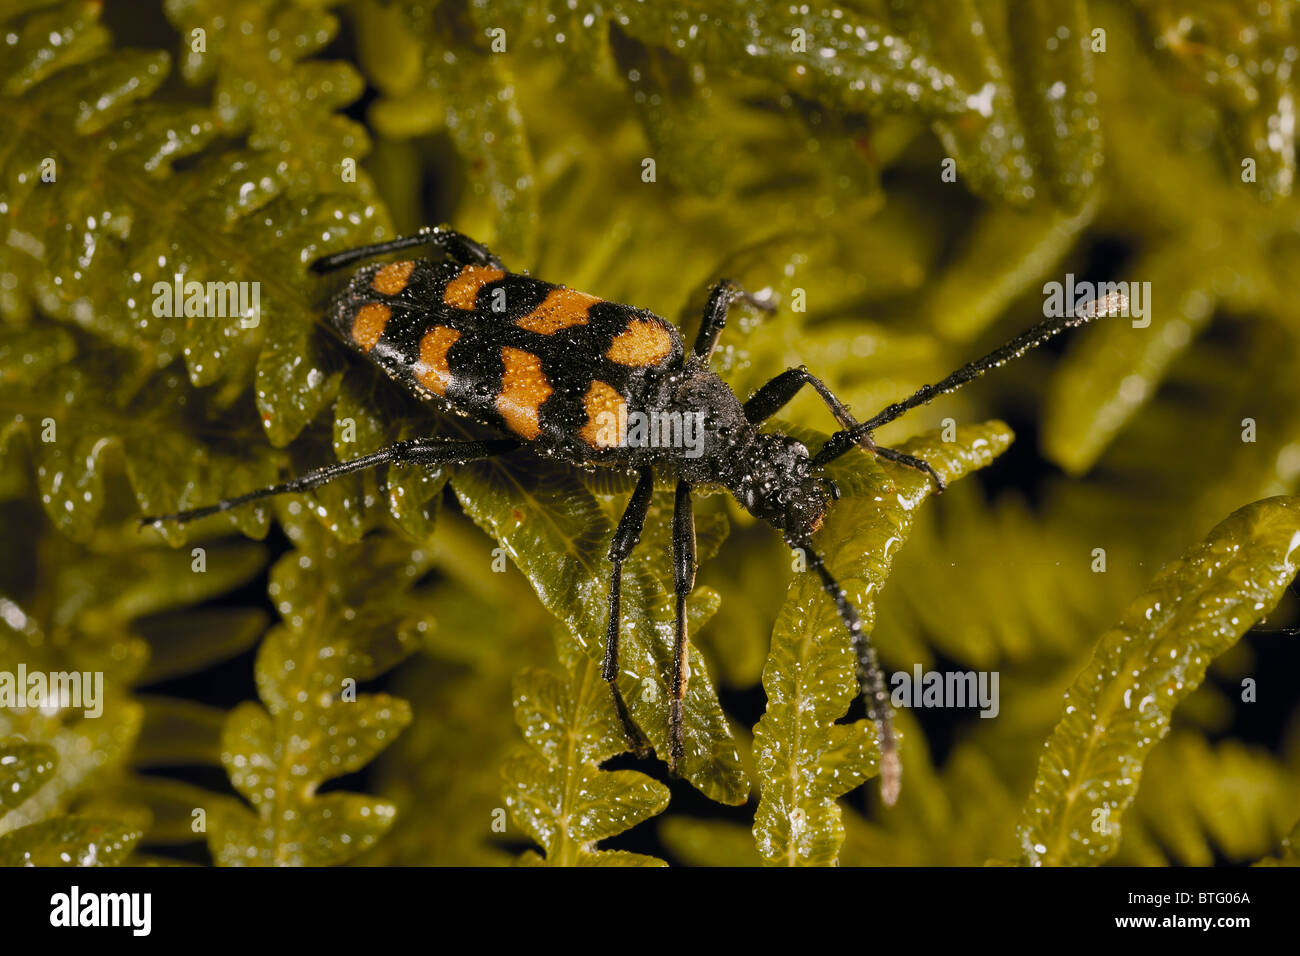 Leptura quadrifasciata L. 1758 capricorn beetle covered in morning dew, Crowle Moor nature reserve, UK Stock Photo